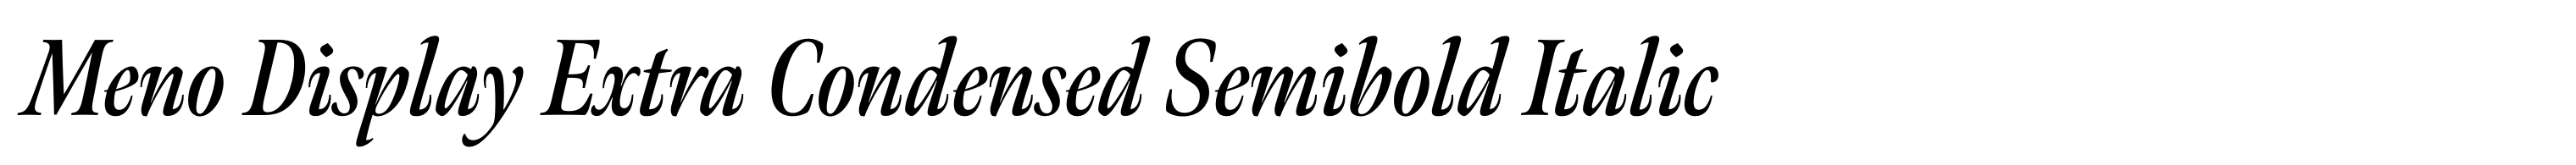 Meno Display Extra Condensed Semibold Italic